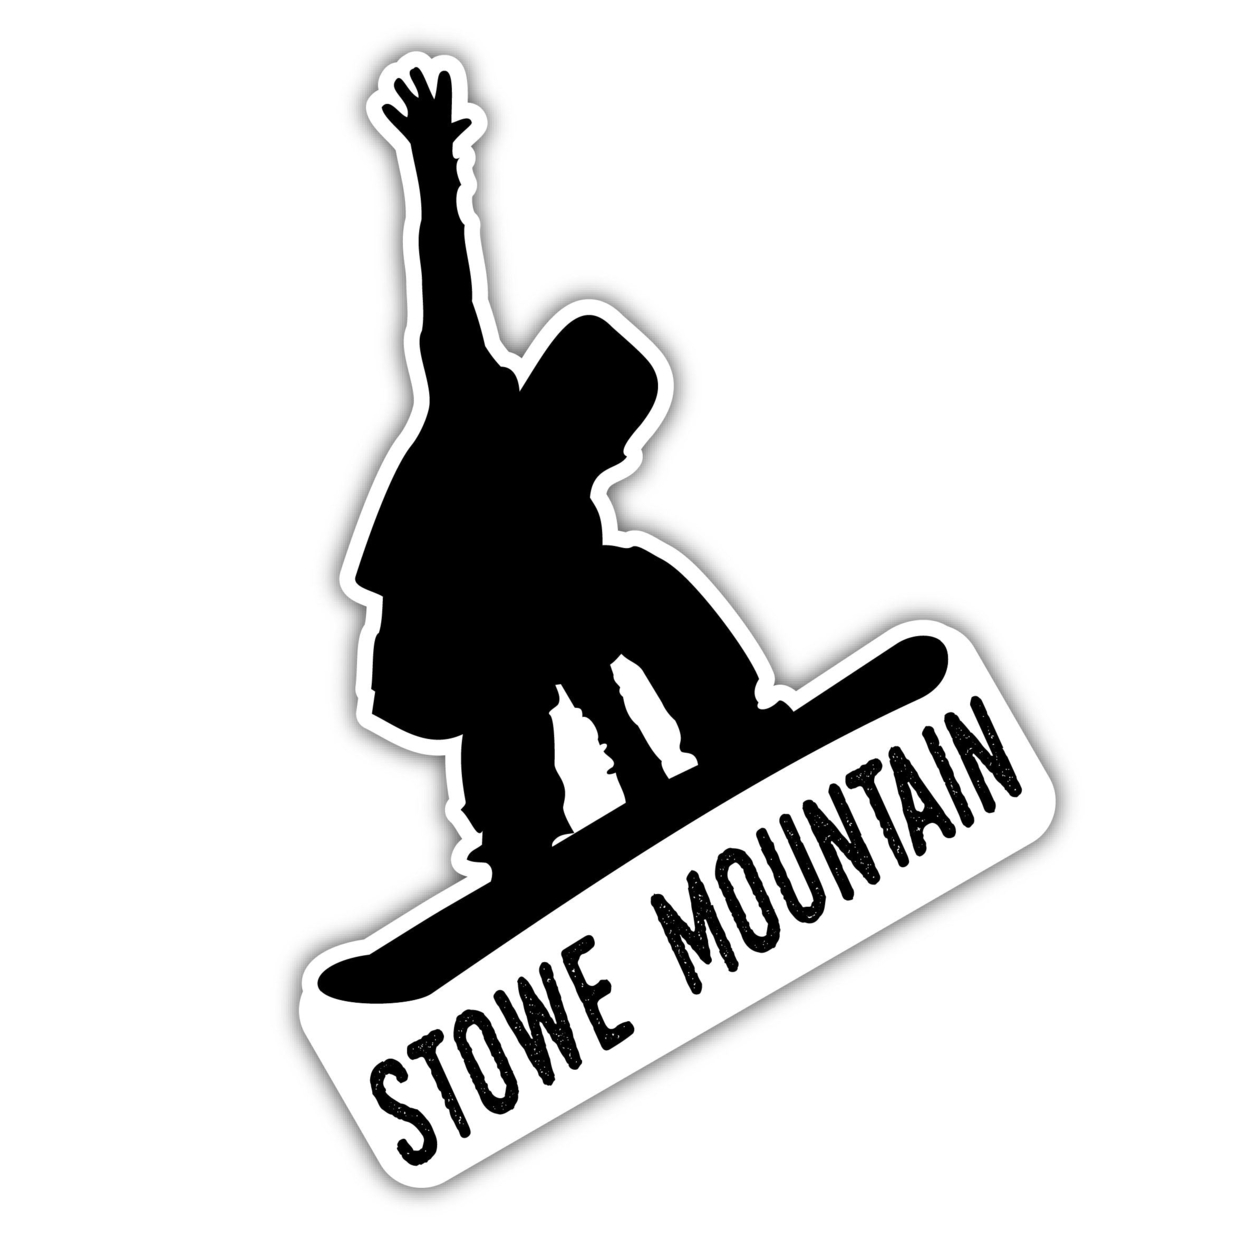 Stowe Mountain Vermont Ski Adventures Souvenir Approximately 5 X 2.5-Inch Vinyl Decal Sticker Goggle Design